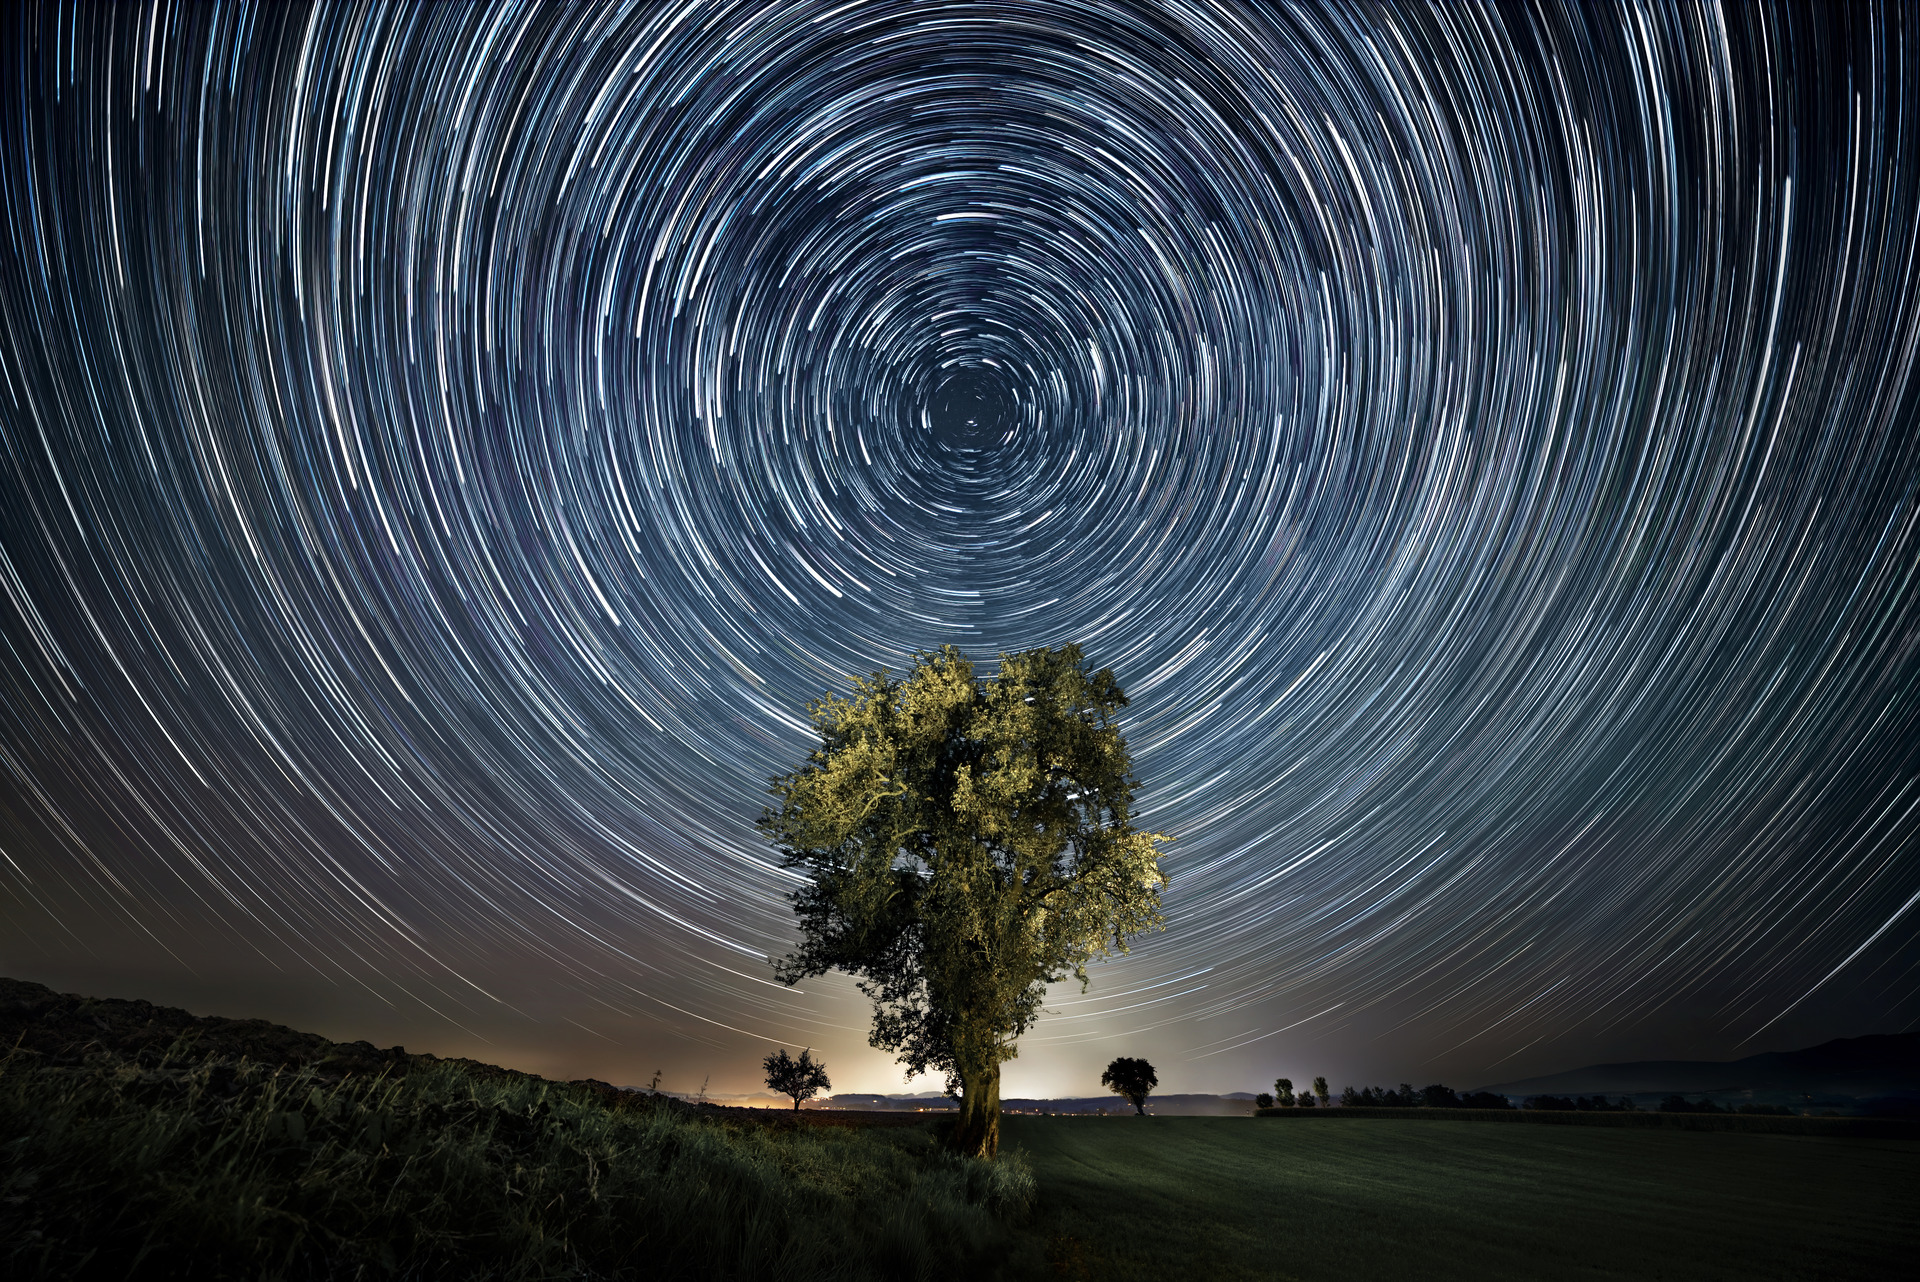 Night sky with circular star trails